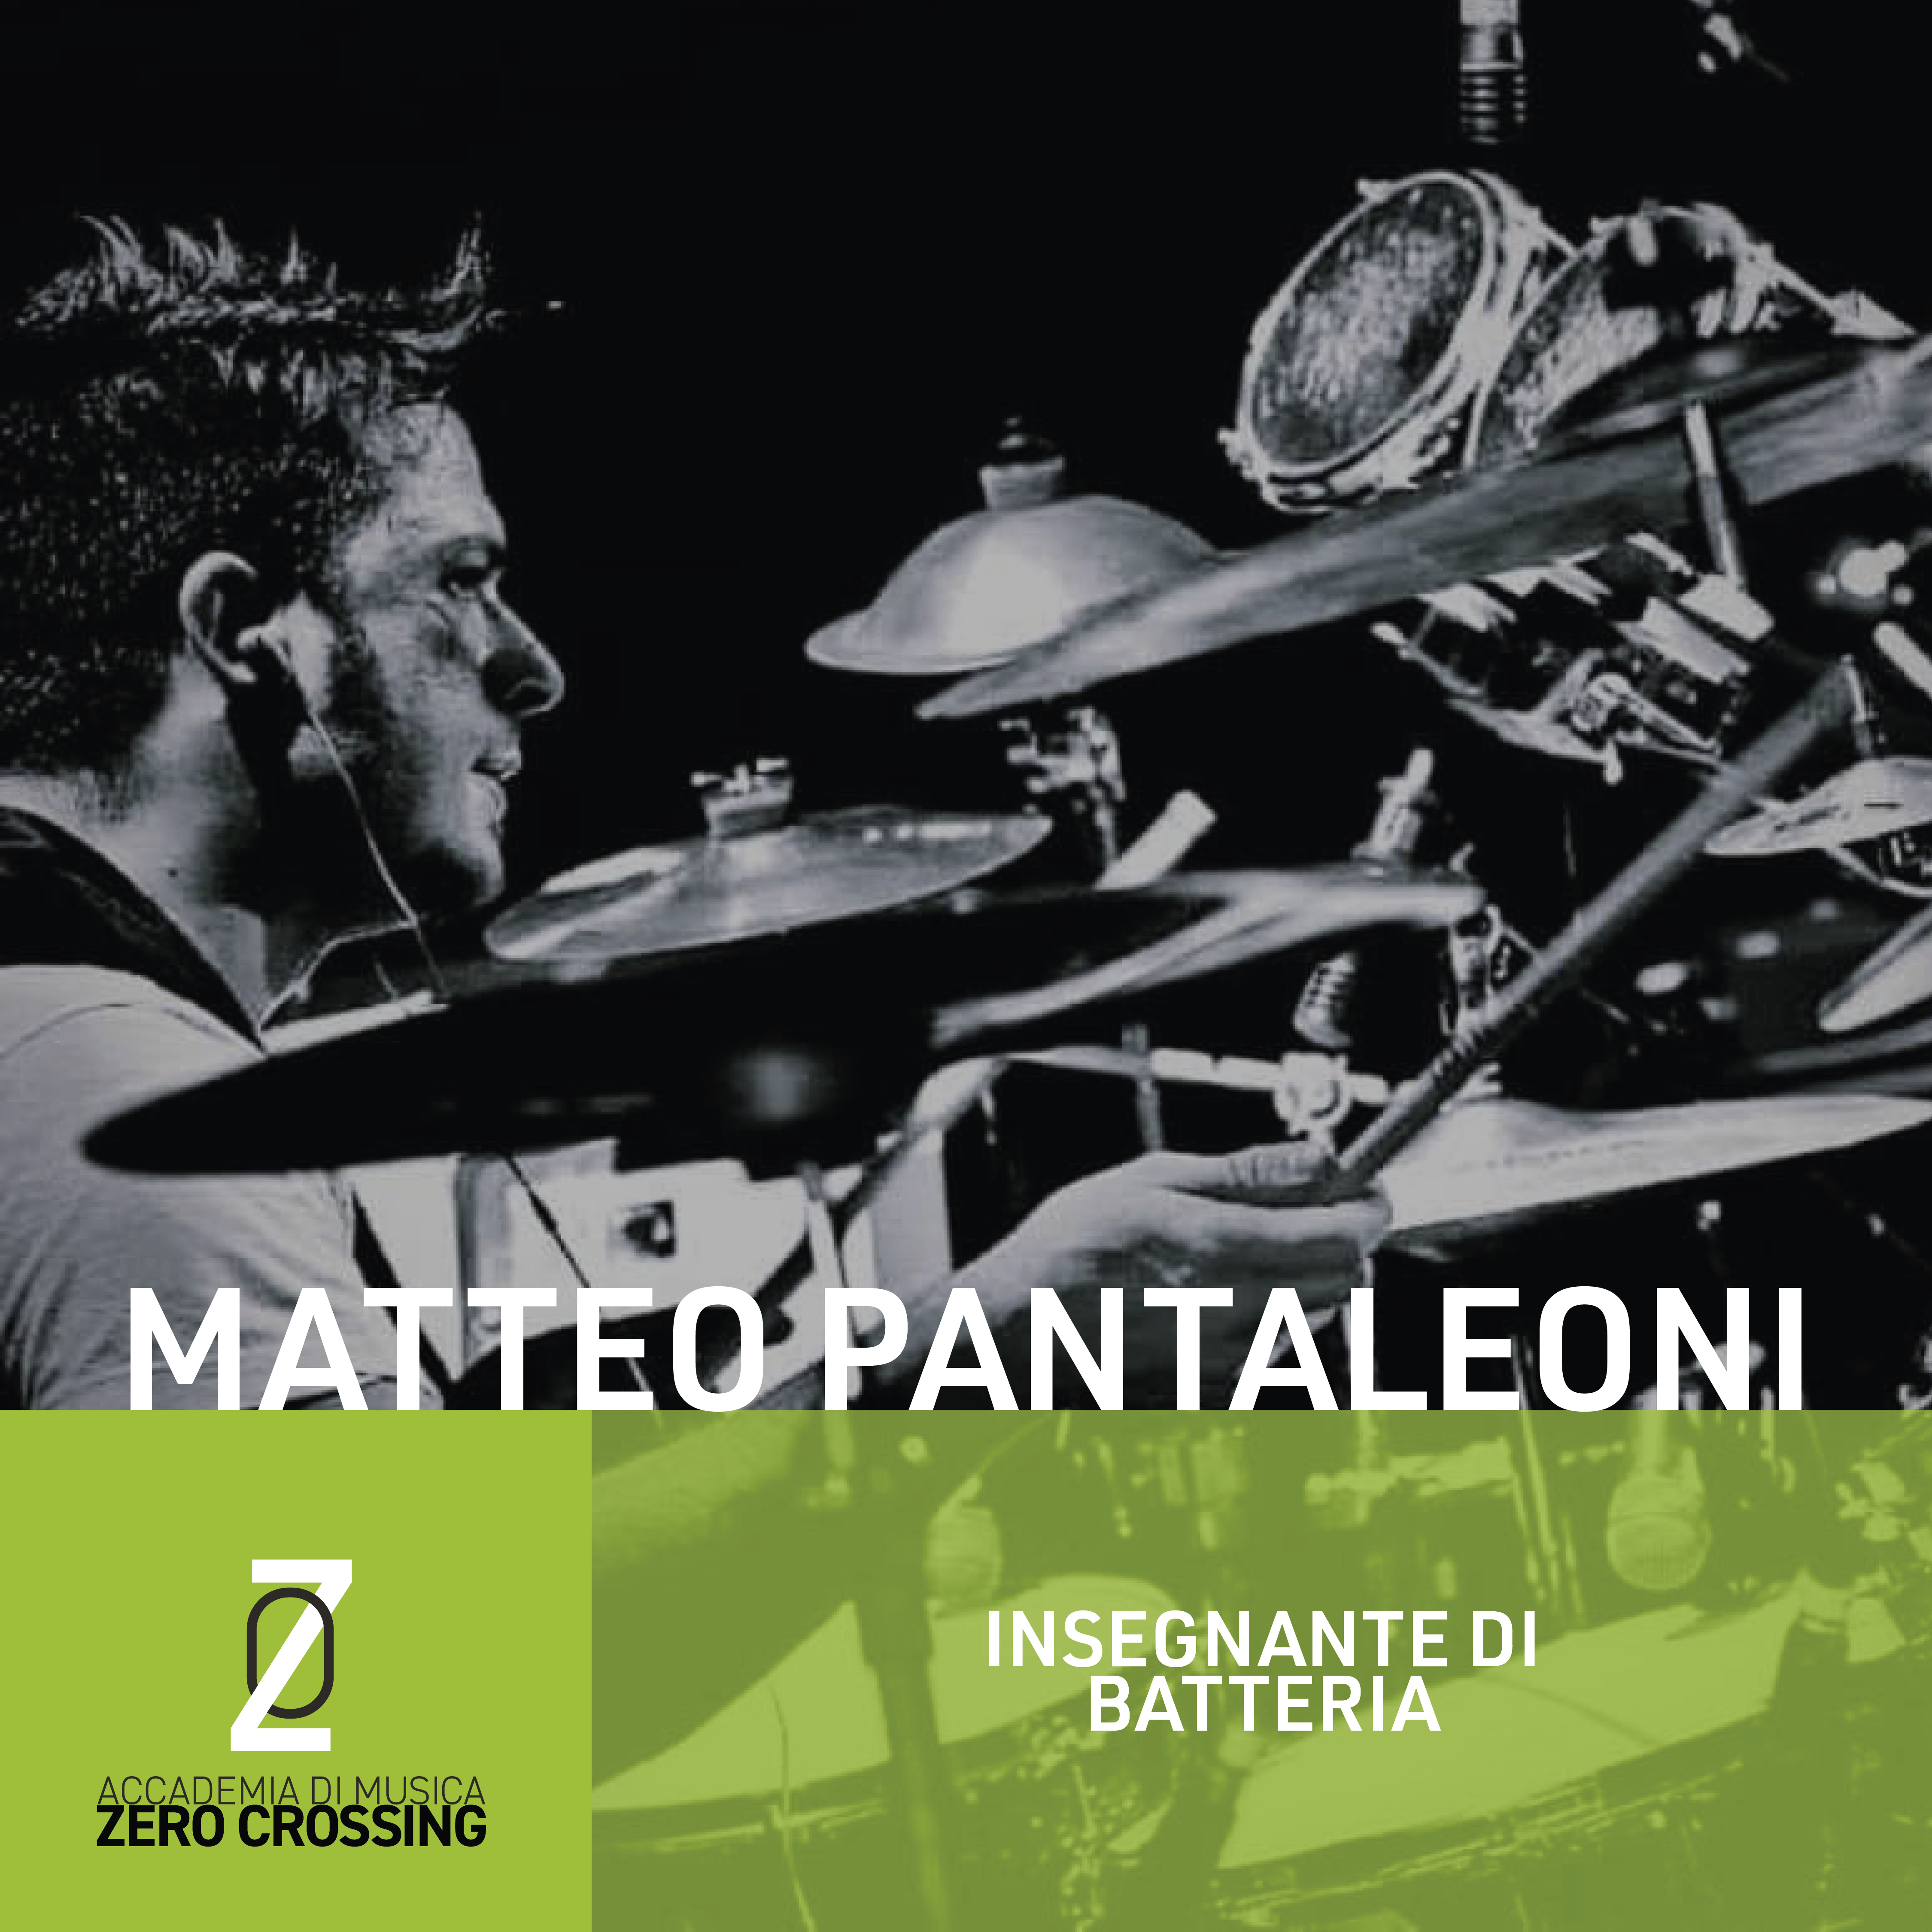 Zero Crossing - Matteo Pantaleoni